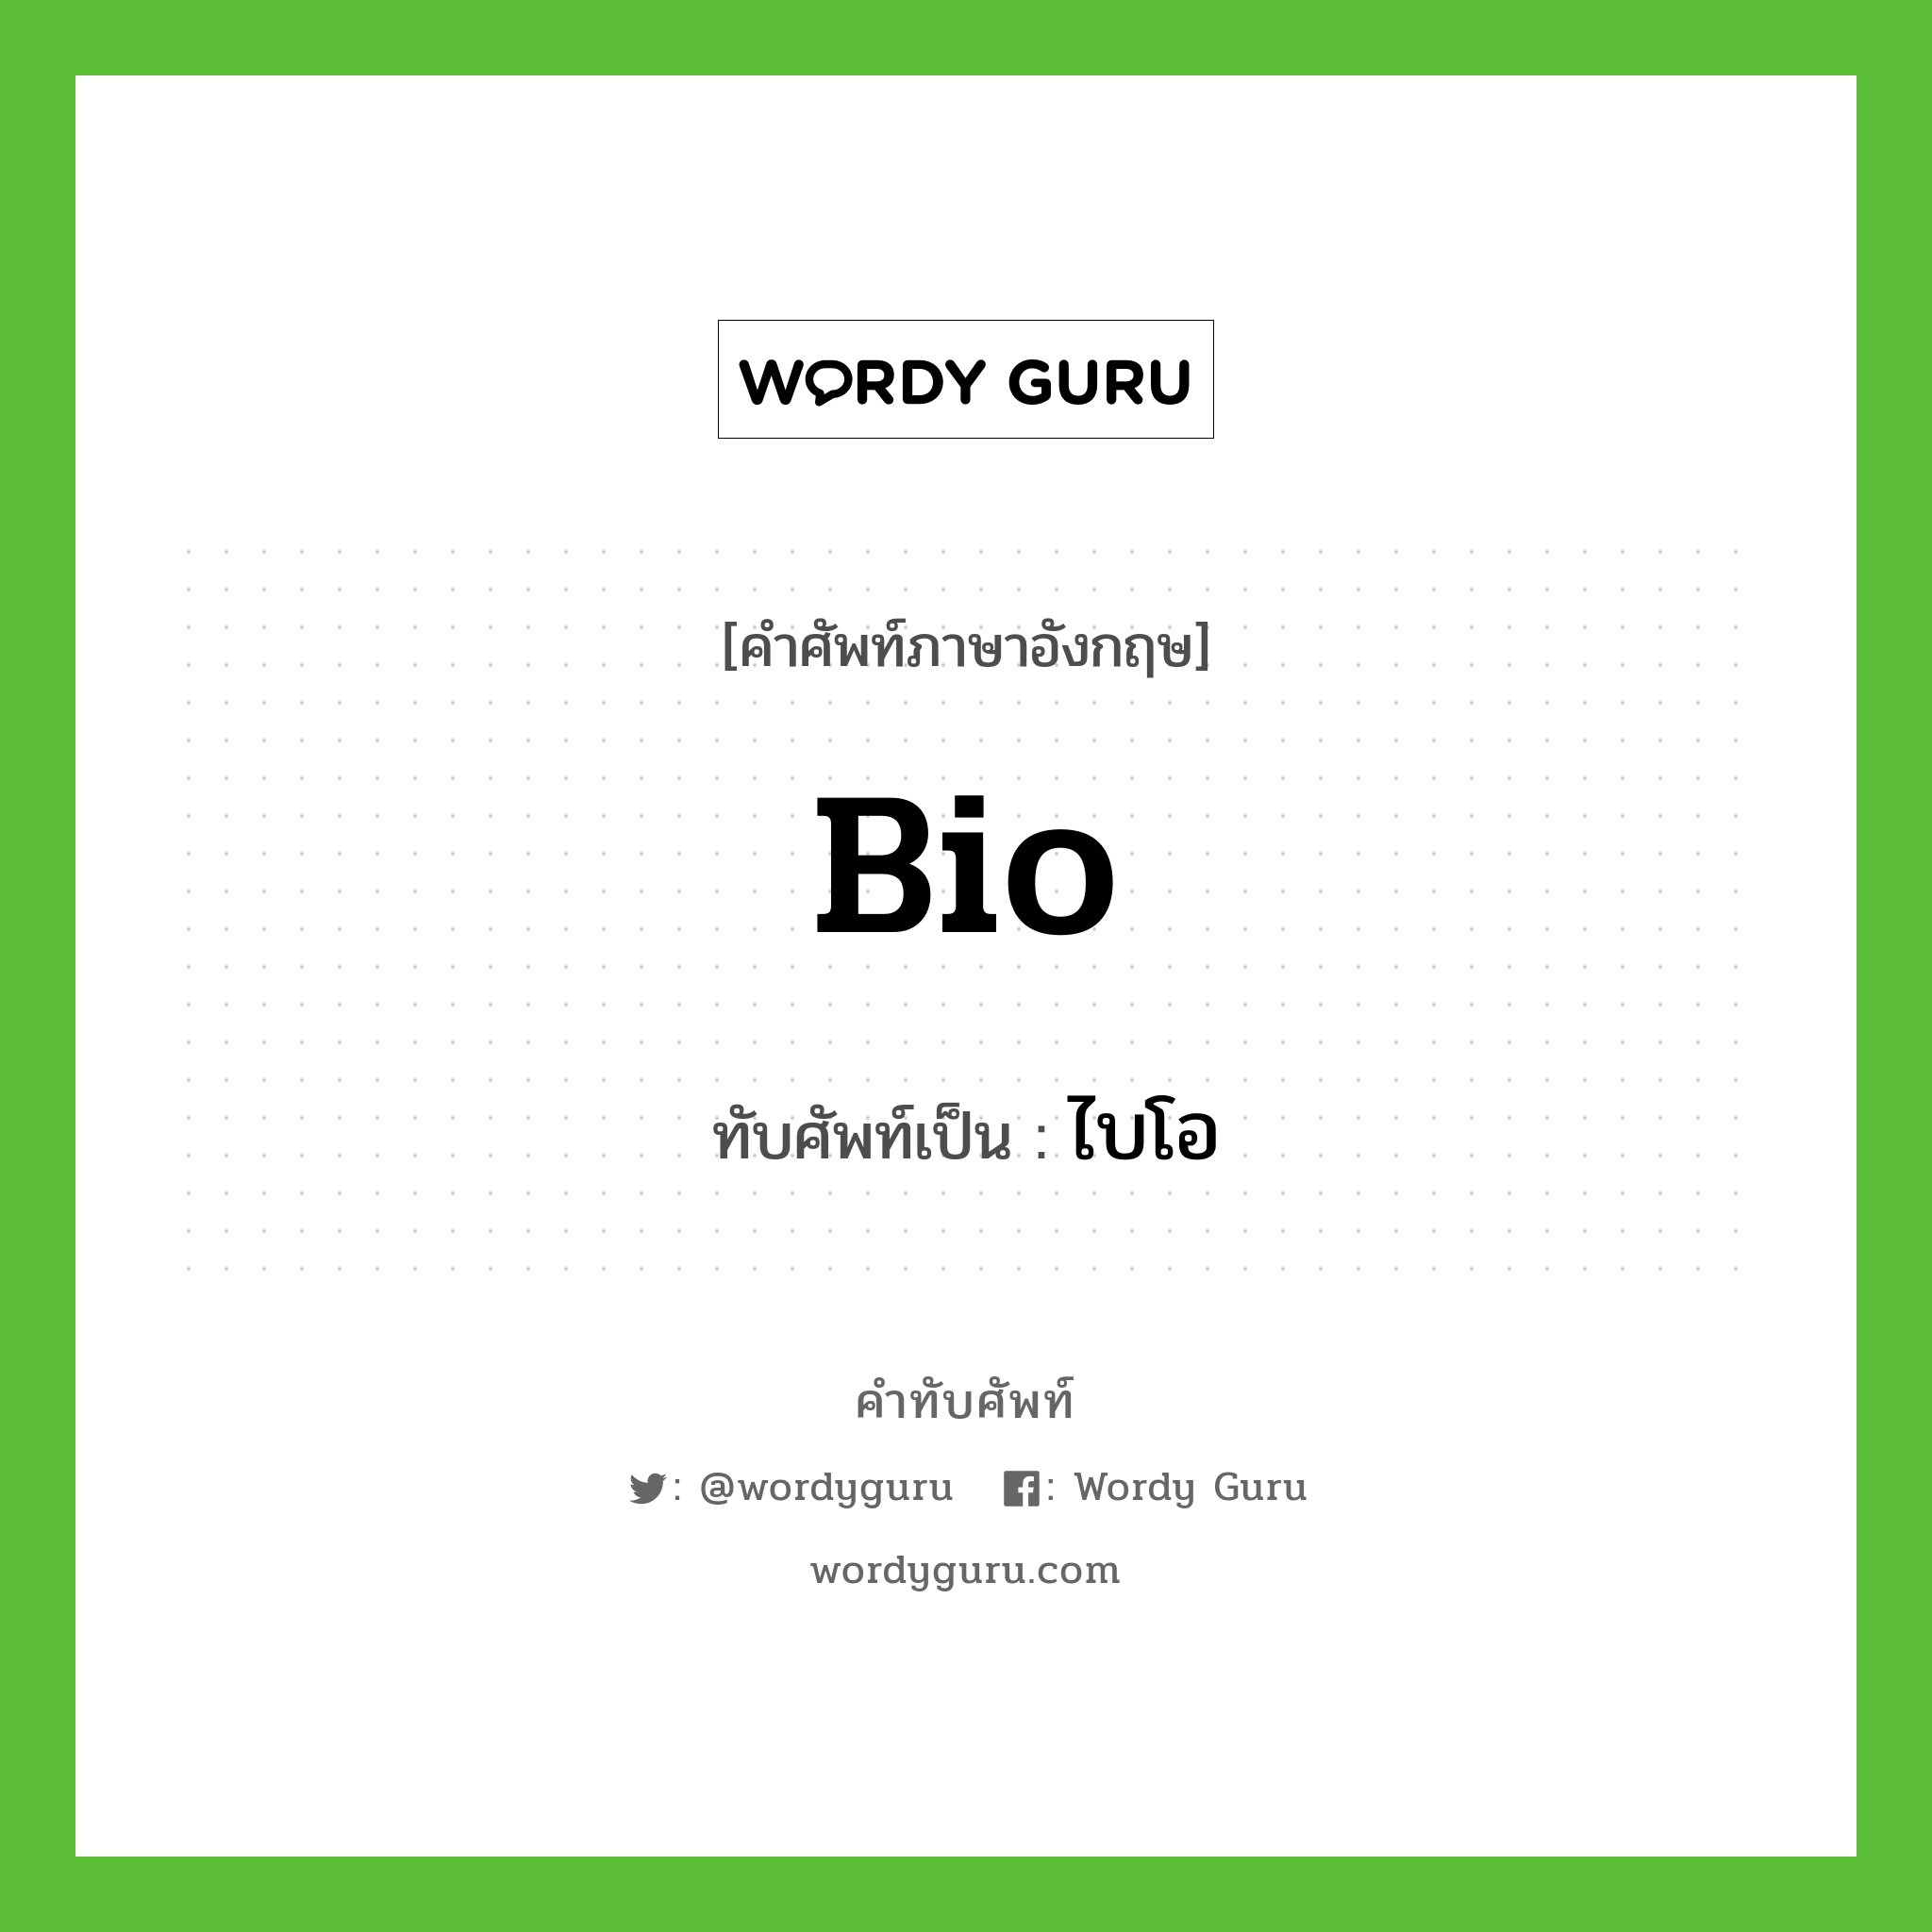 bio เขียนเป็นคำไทยว่าอะไร?, คำศัพท์ภาษาอังกฤษ bio ทับศัพท์เป็น ไบโอ